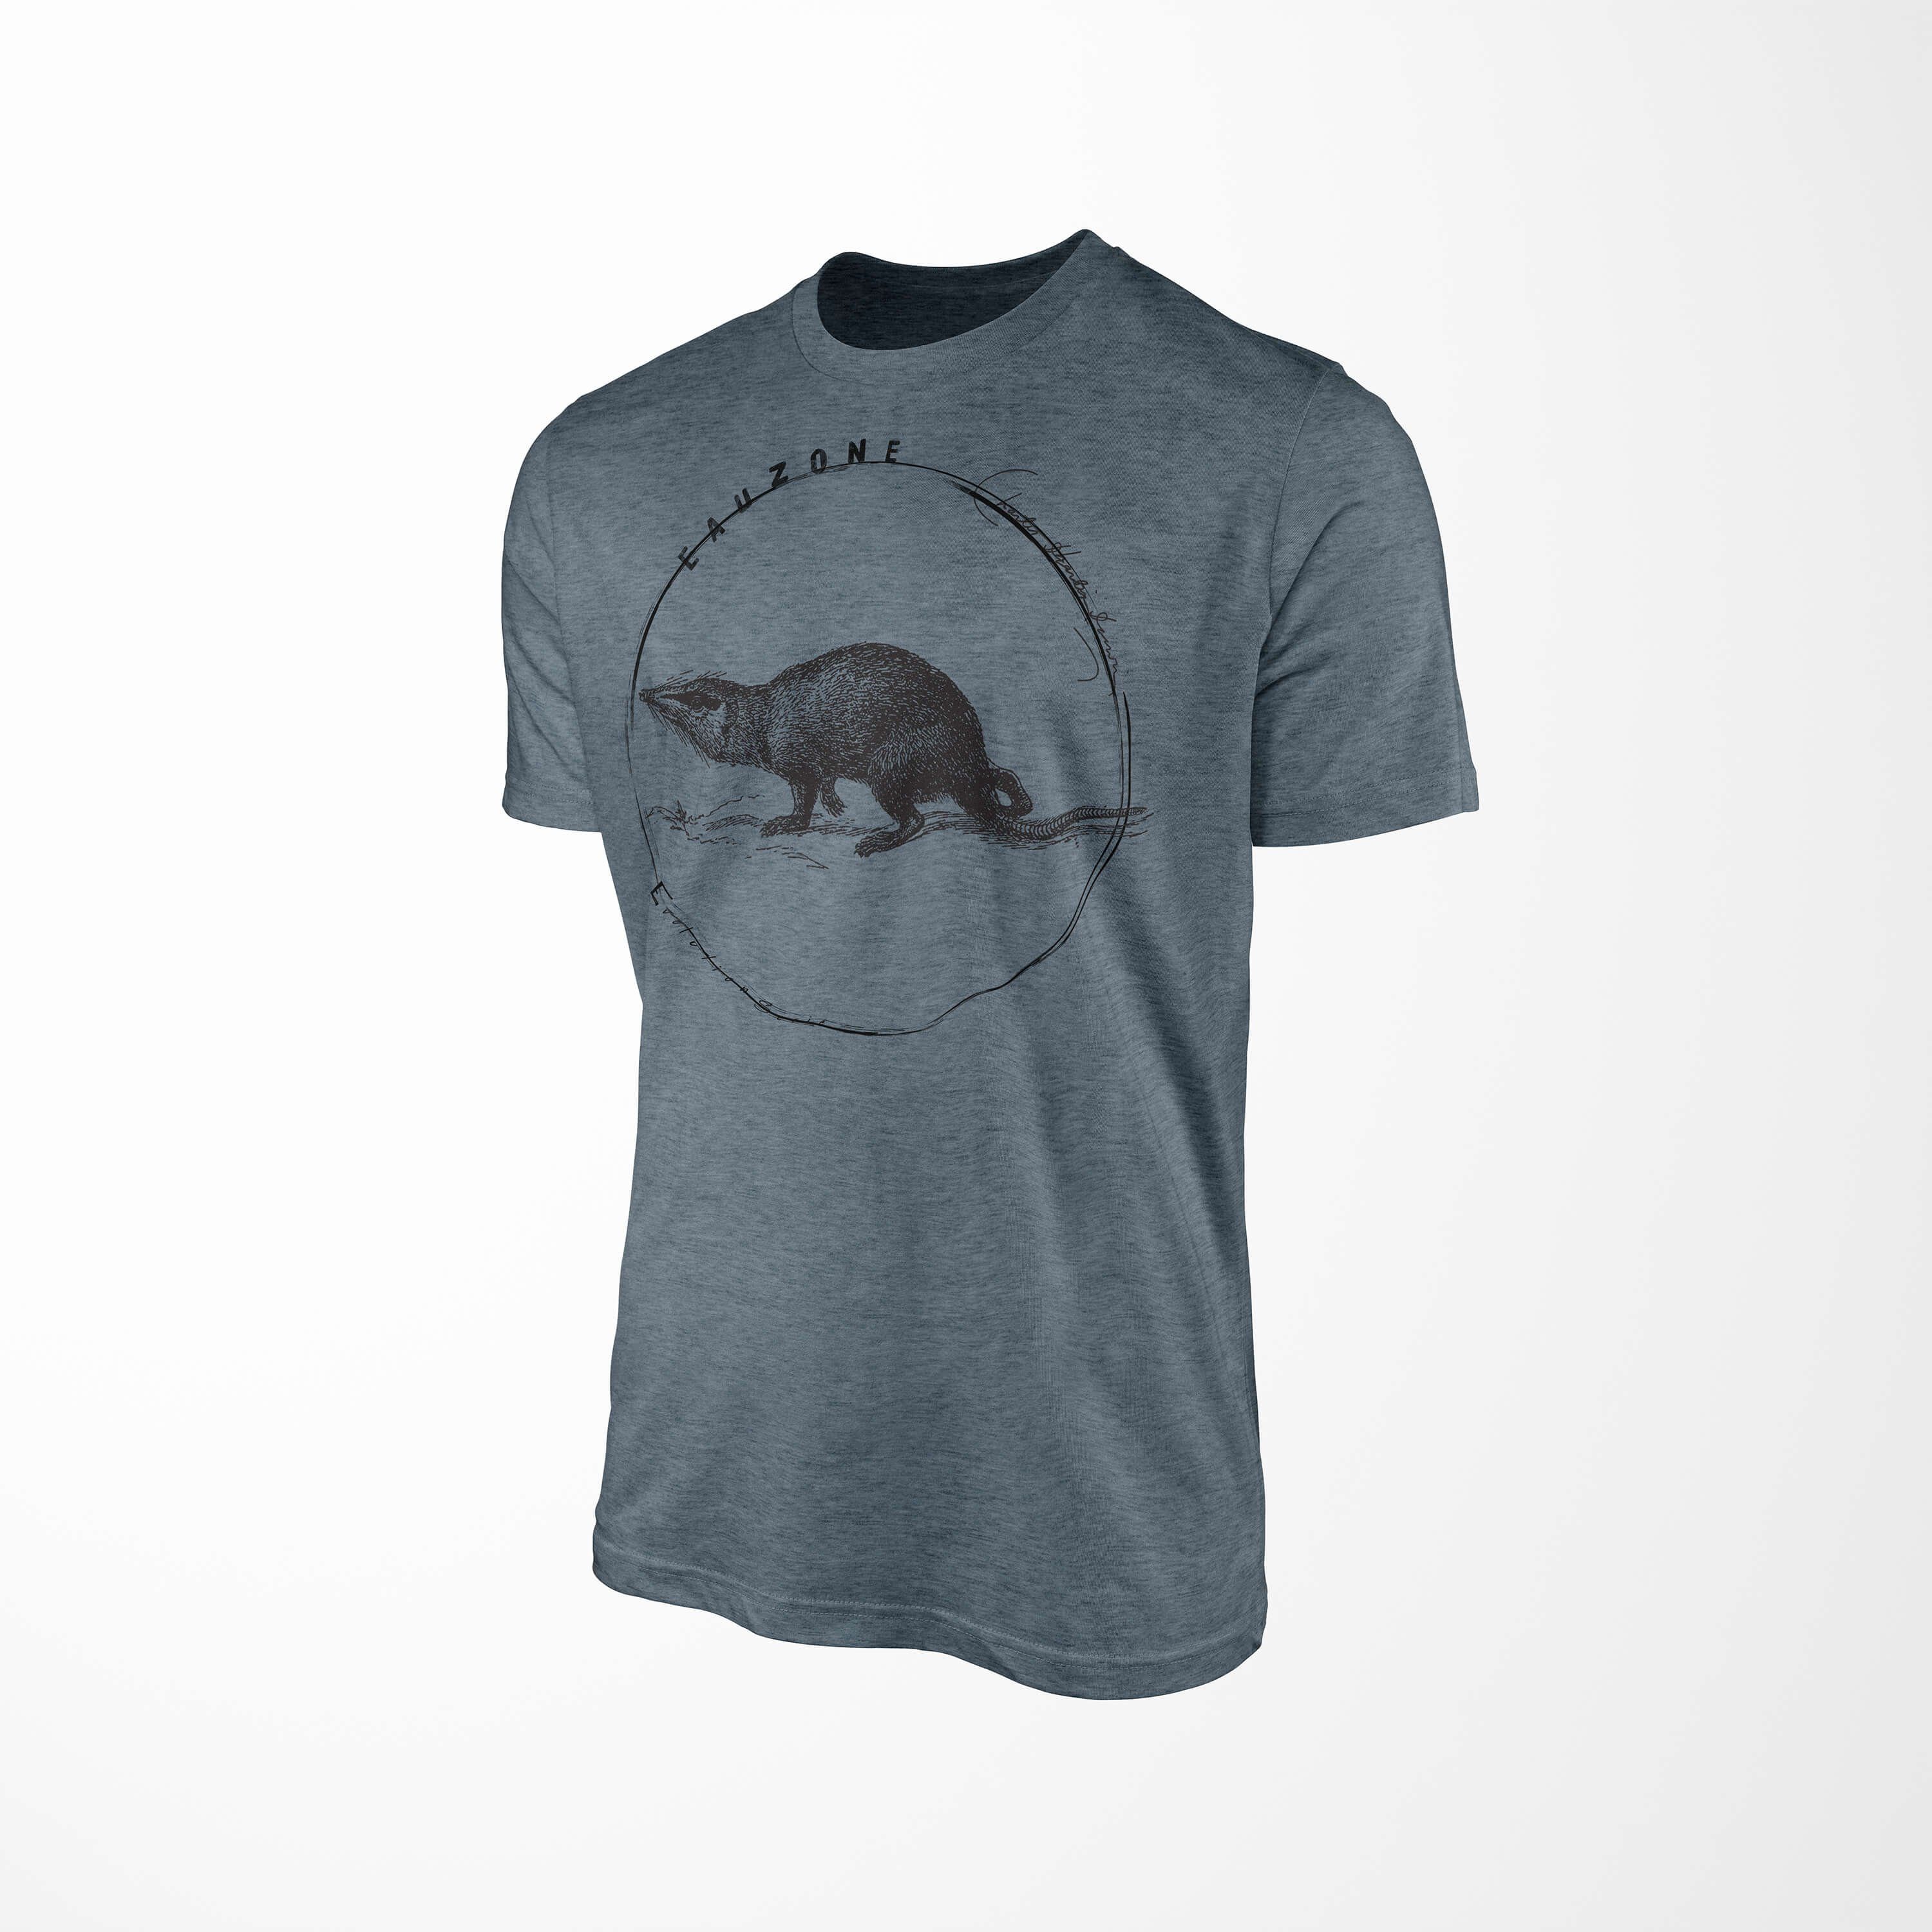 Art T-Shirt Herren Sinus Rattenigel Indigo Evolution T-Shirt